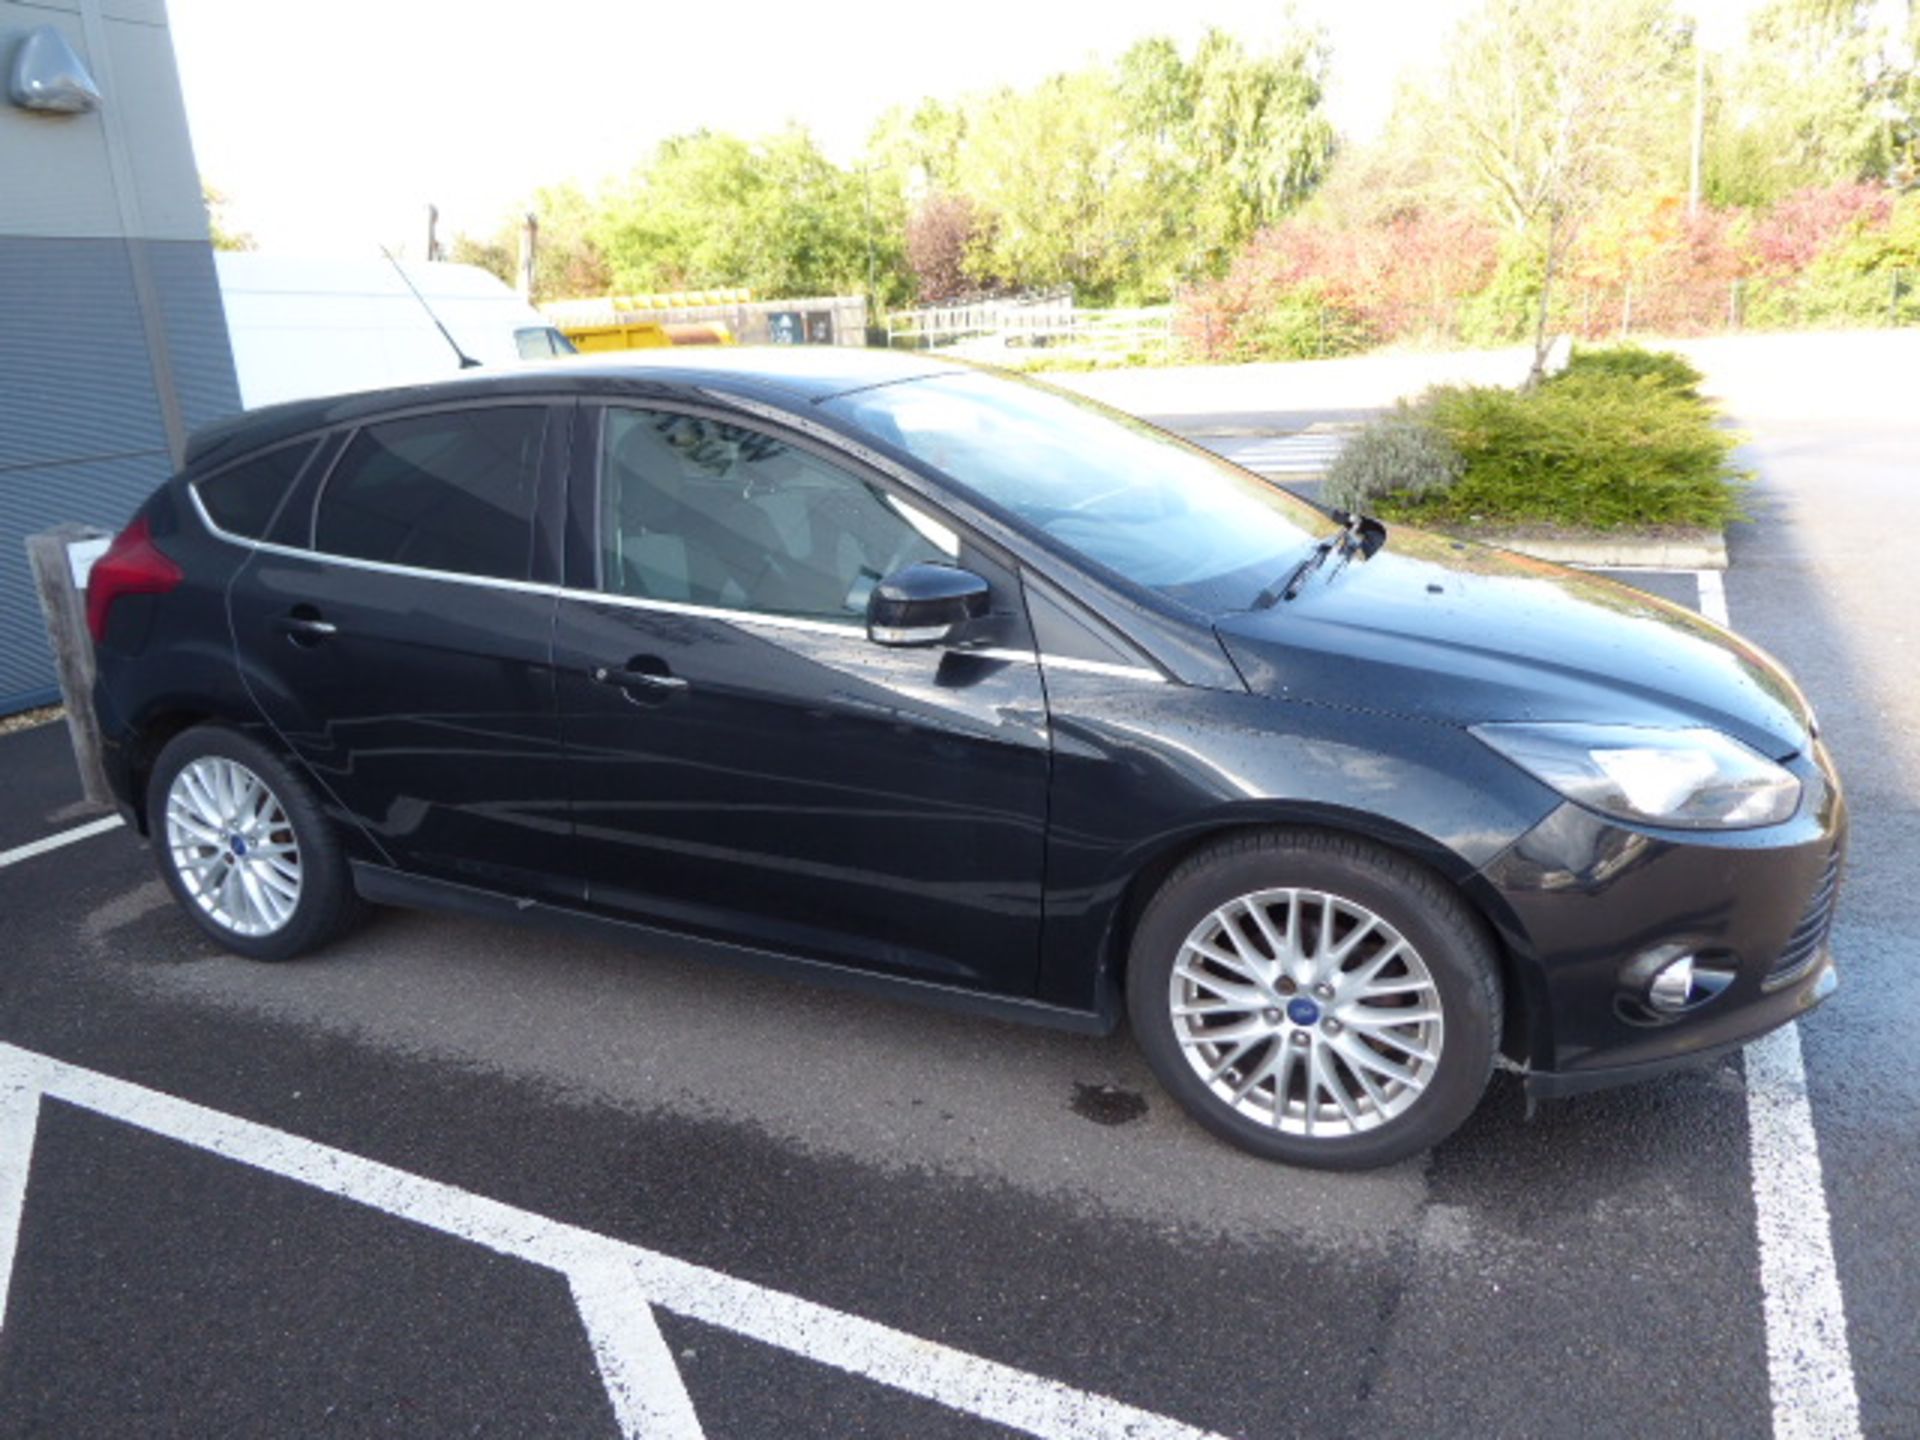 MJ13 XYP (2013) Ford Focus Zetec Turbo, 998cc petrol 5 door hatchback in black MOT: 6/10/21 - Image 2 of 8